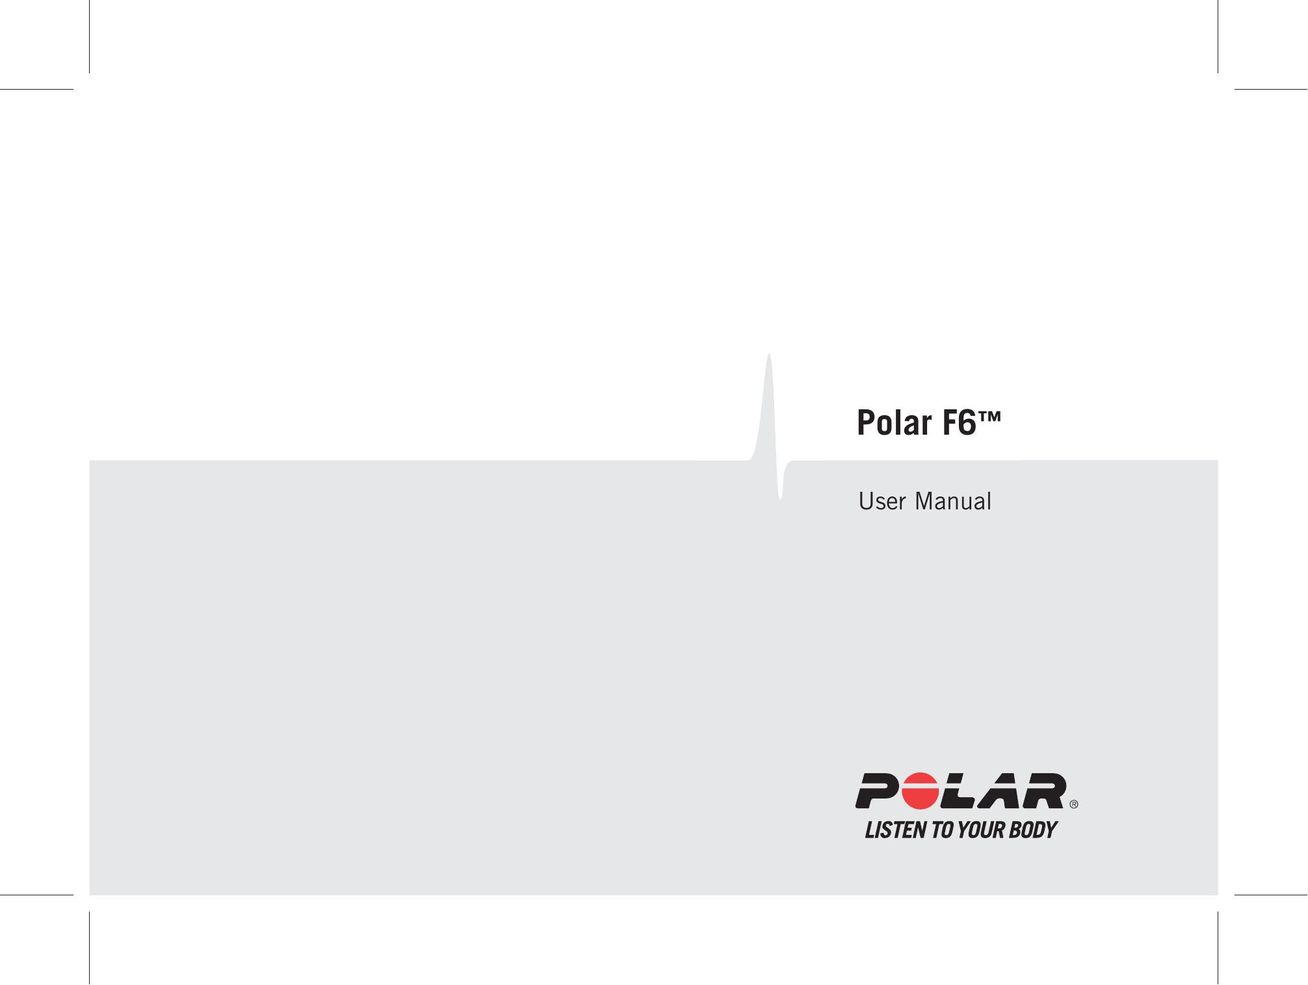 Polar F6 Fitness Electronics User Manual